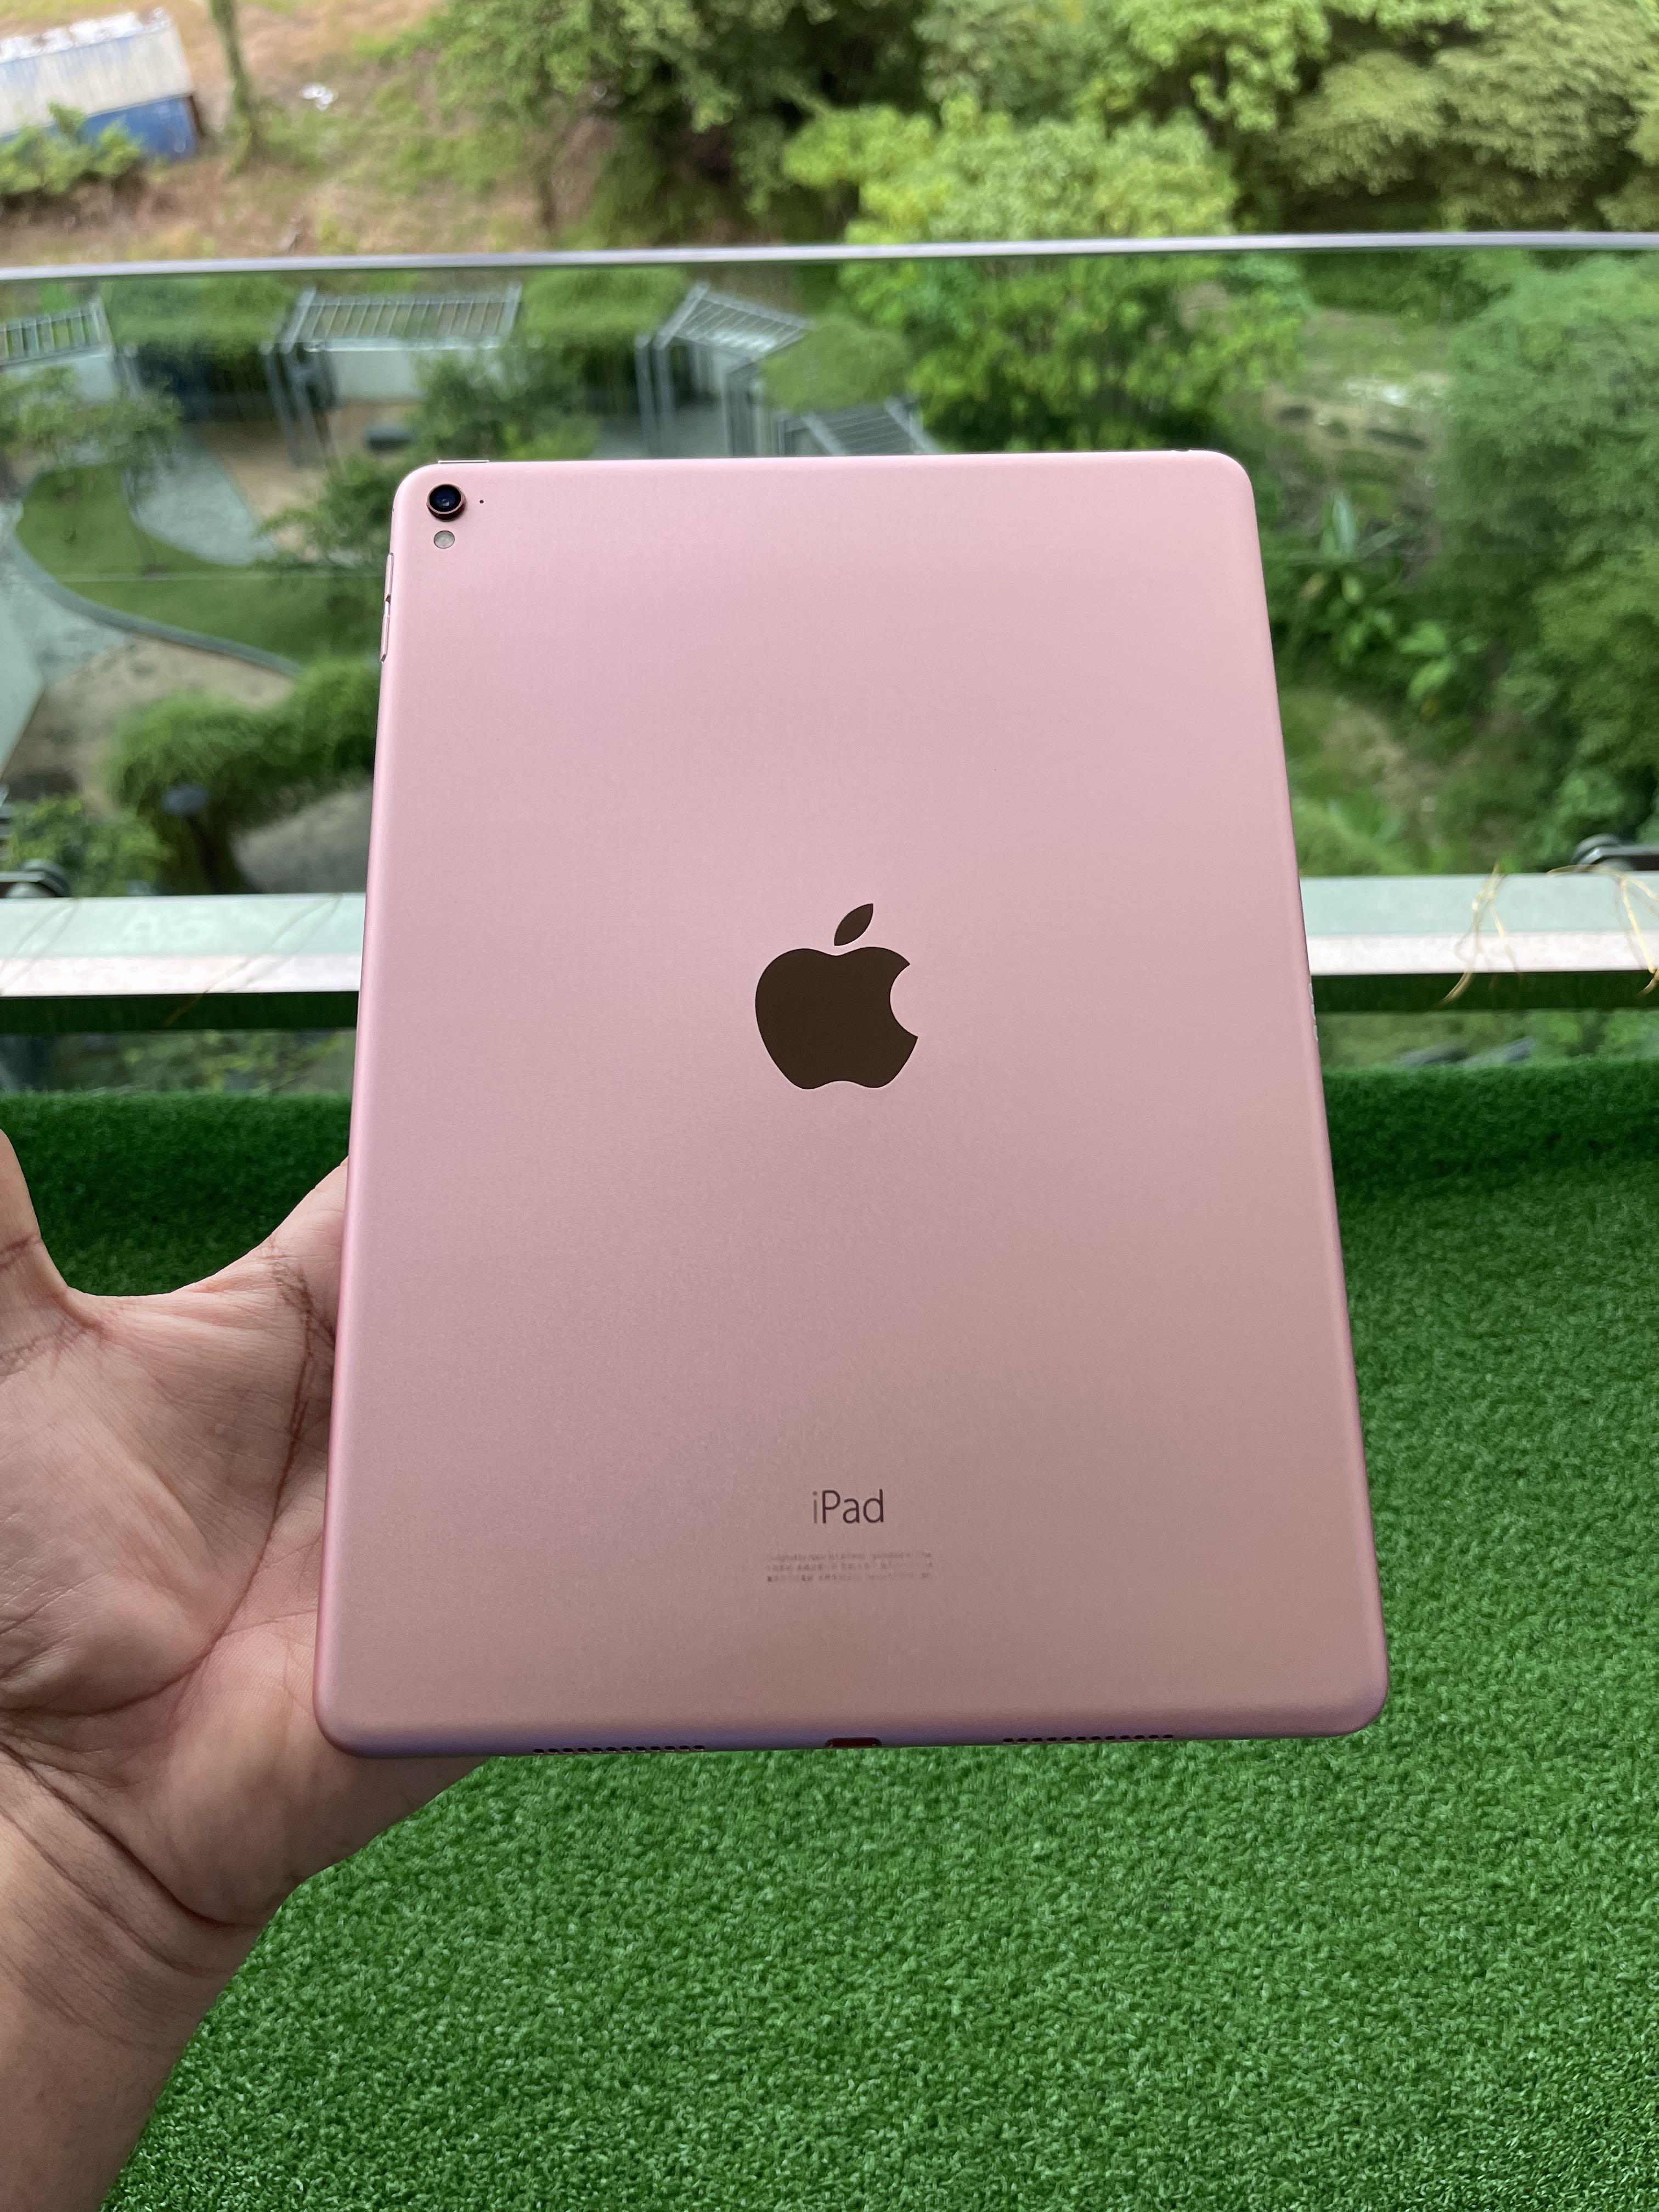 🍎 Apple iPad Pro 9.7-inch (128GB) WiFi Rose Gold Colour + Free Apple  Pencil 1st Generation